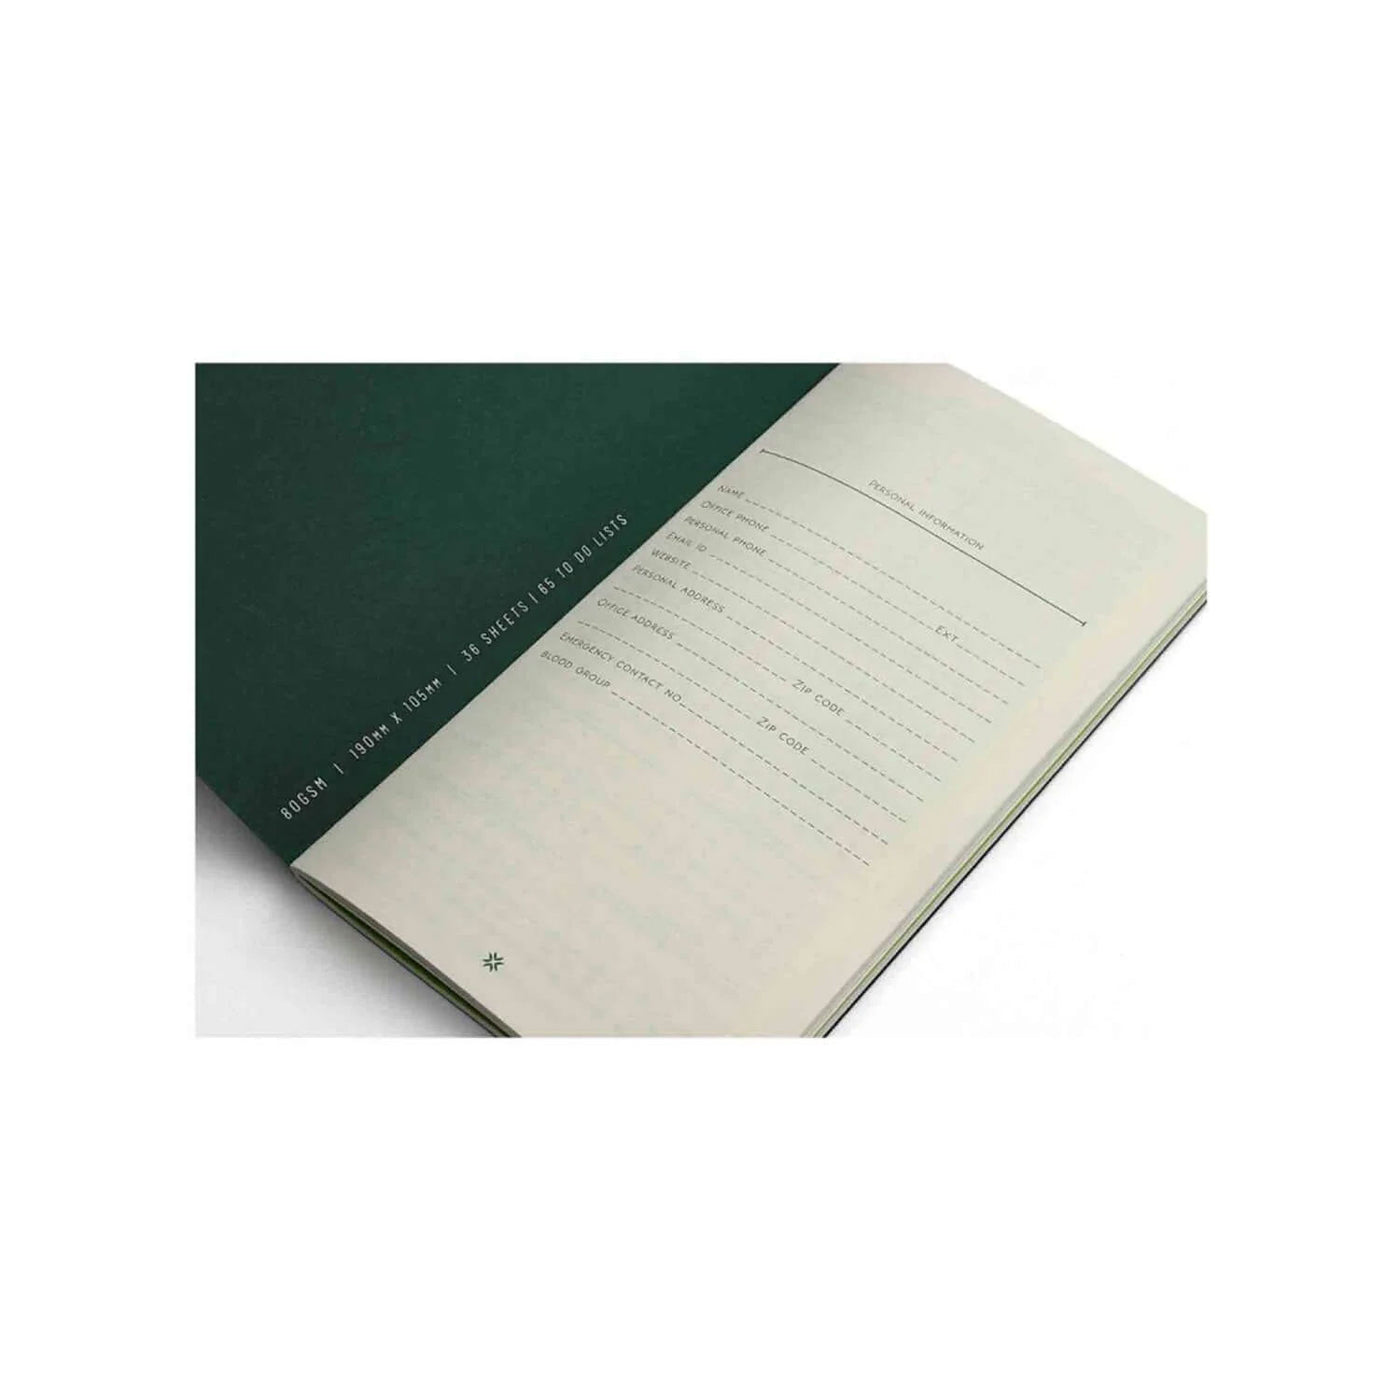 Pennline Quikfill Notebook Refill For Quikrite, Green - Set Of 2 3